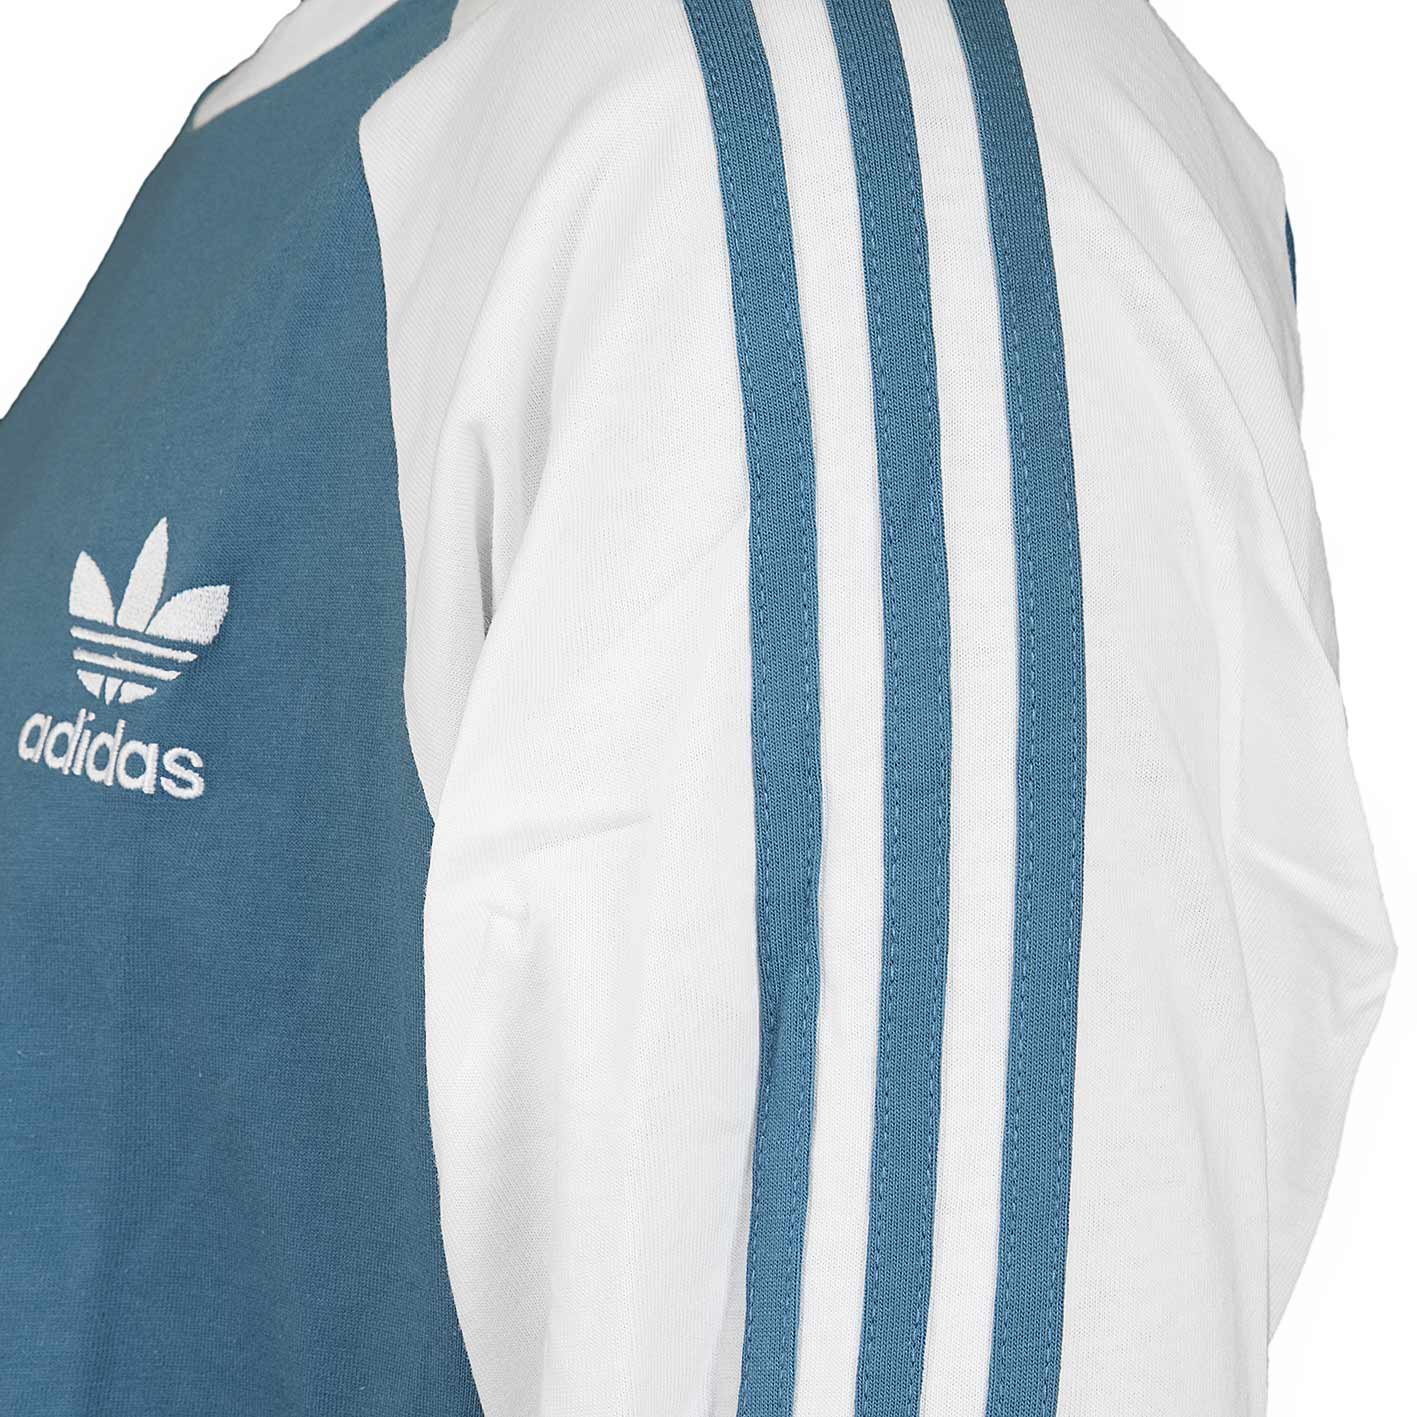 ☆ Adidas Originals Longsleeve 3-Stripes blau - hier bestellen!